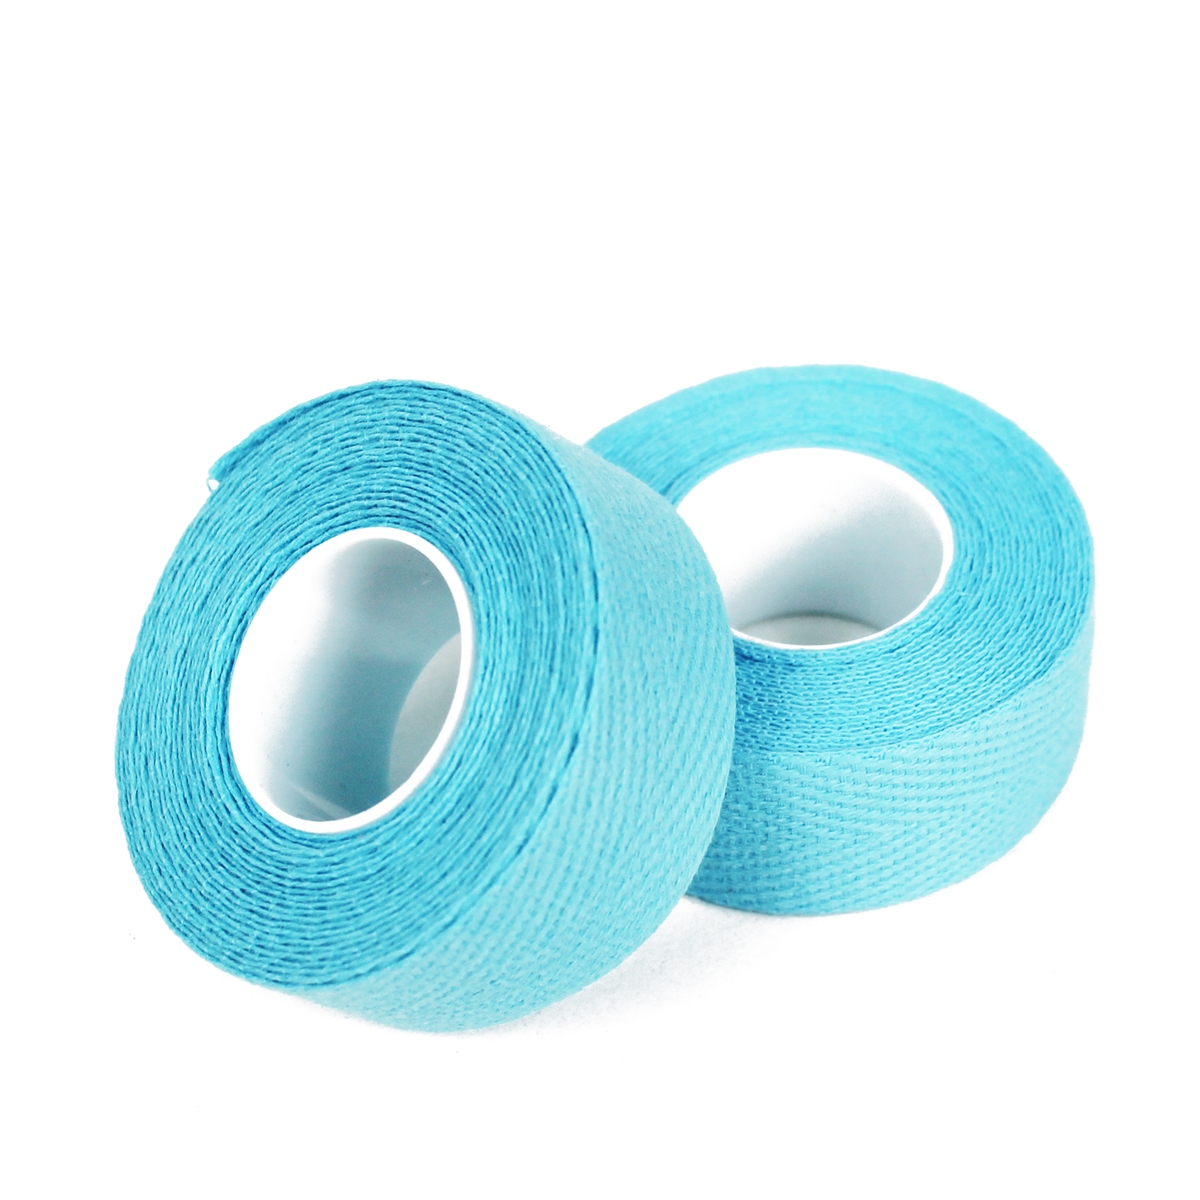 Pair cotton vintage retrò handlebar tape turquoise